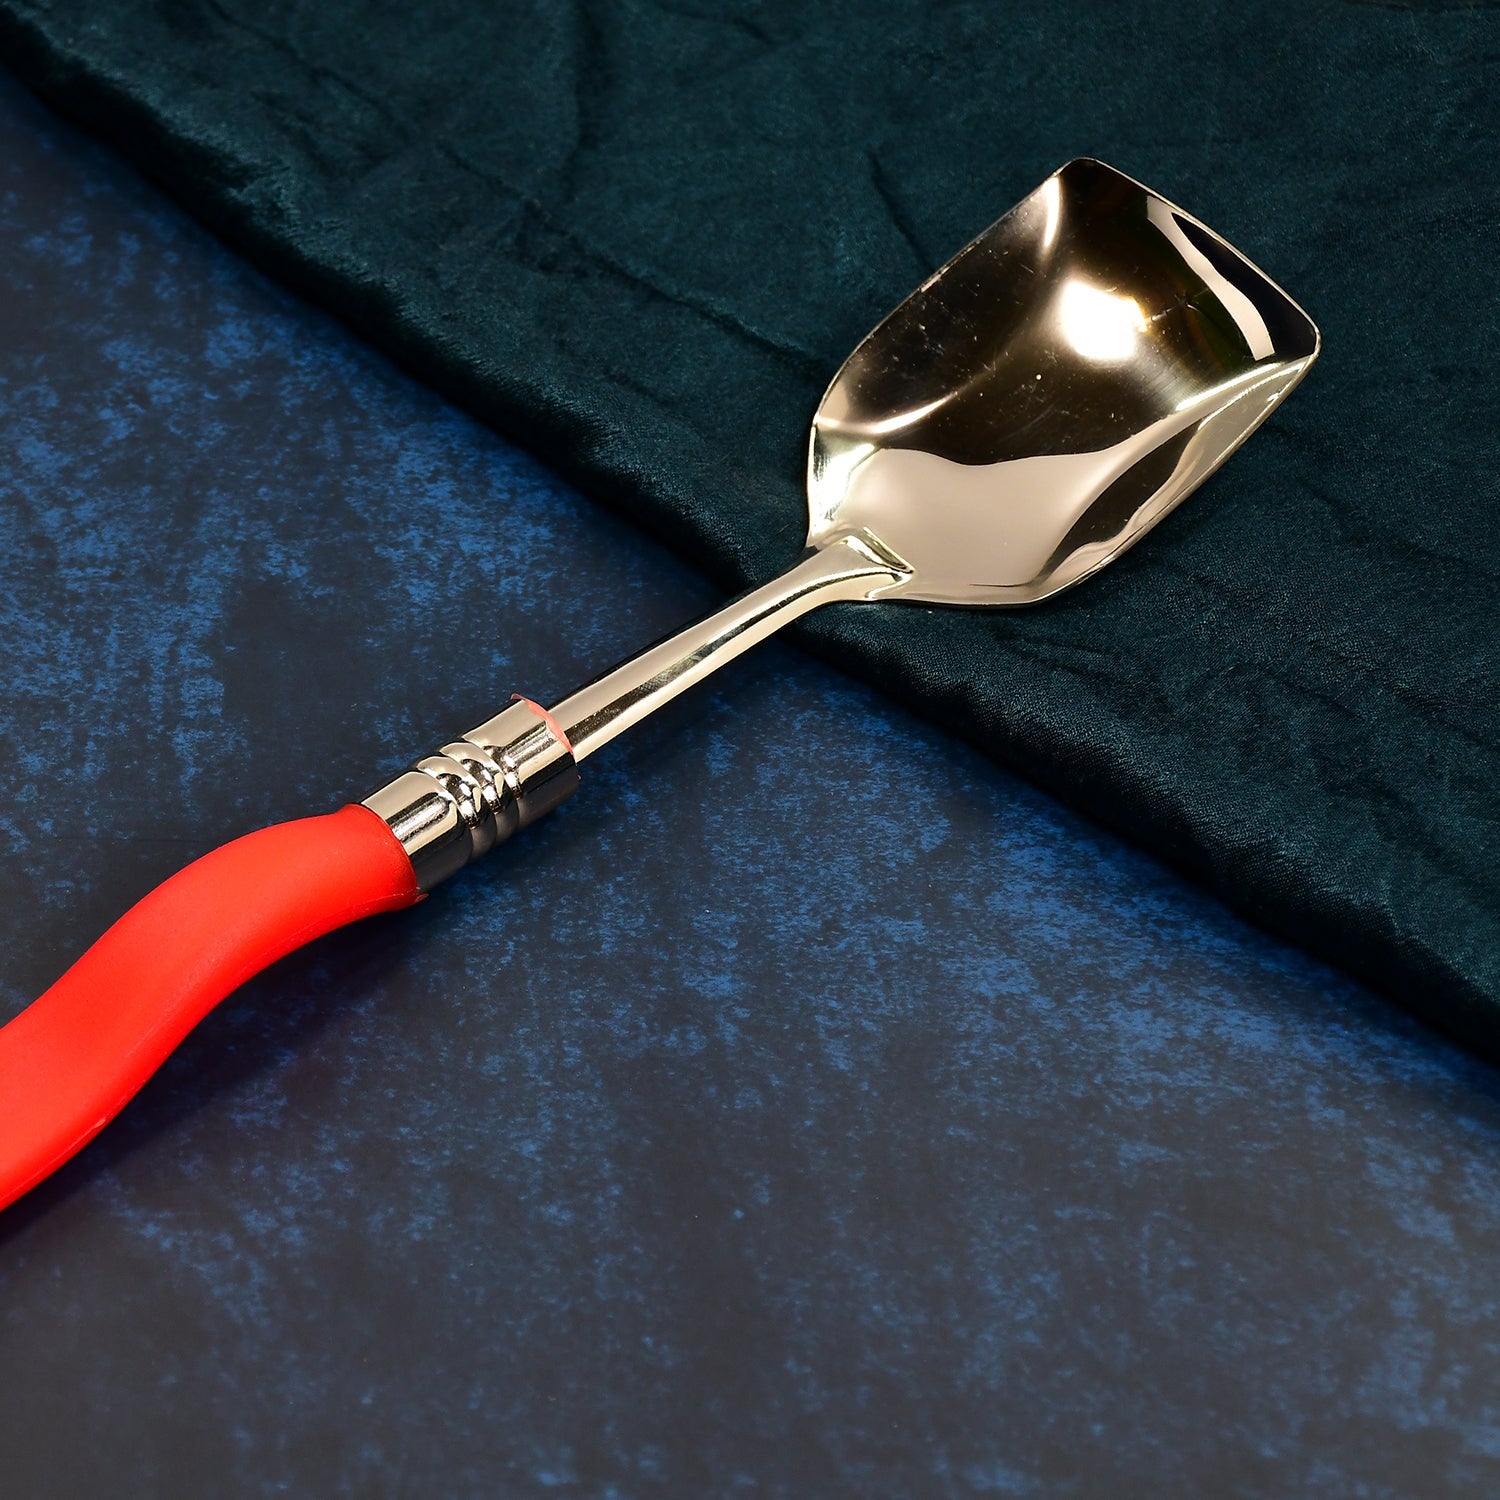 2938 Square Head Spoons Stainless Steel Spoon for Ice Cream, Dessert etc DeoDap